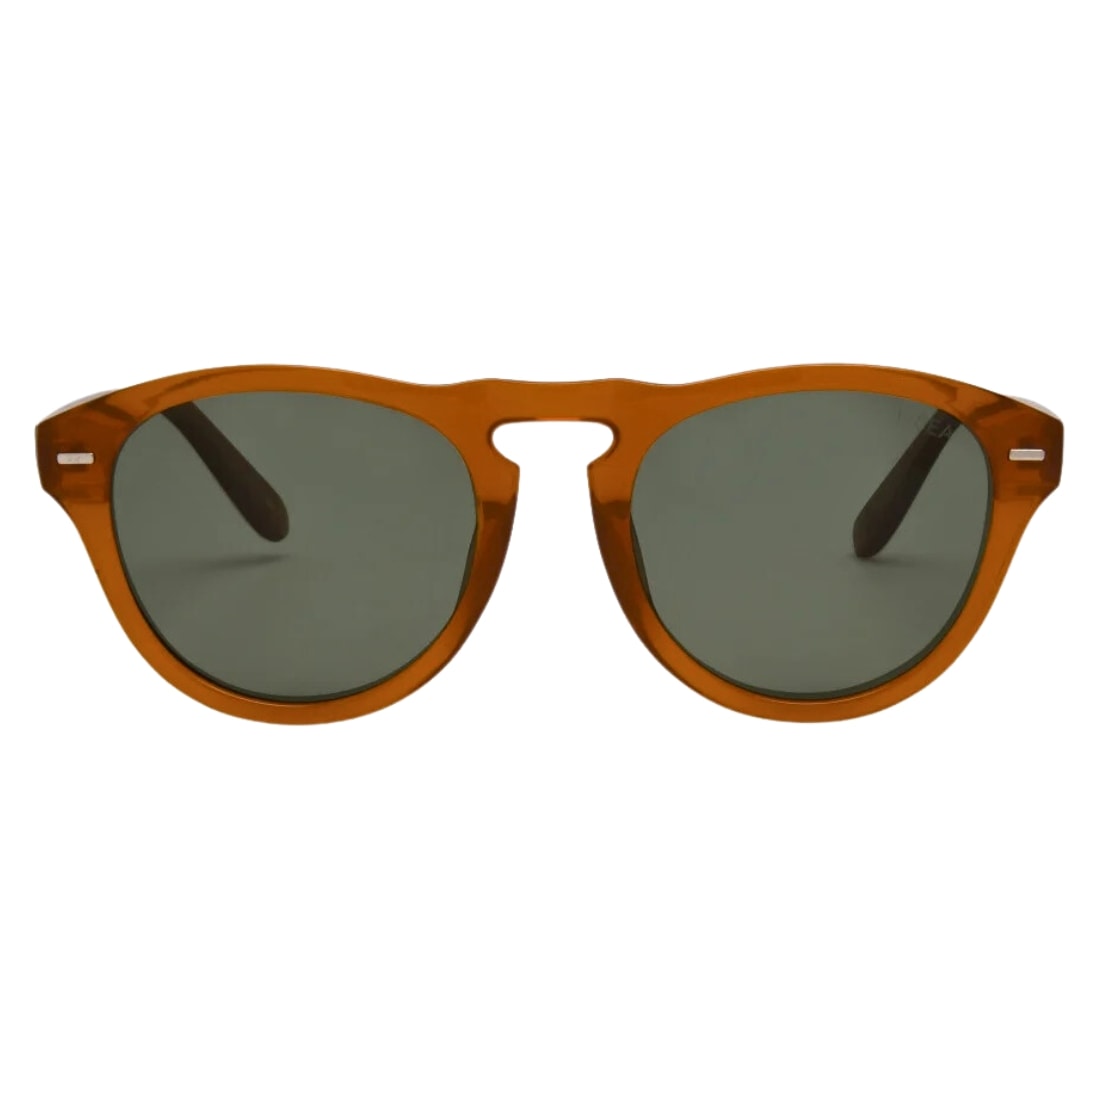 I-Sea Swell Round Polarised Sunglasses - Sunshine/Green Polarized Lens - Round Sunglasses by I-Sea